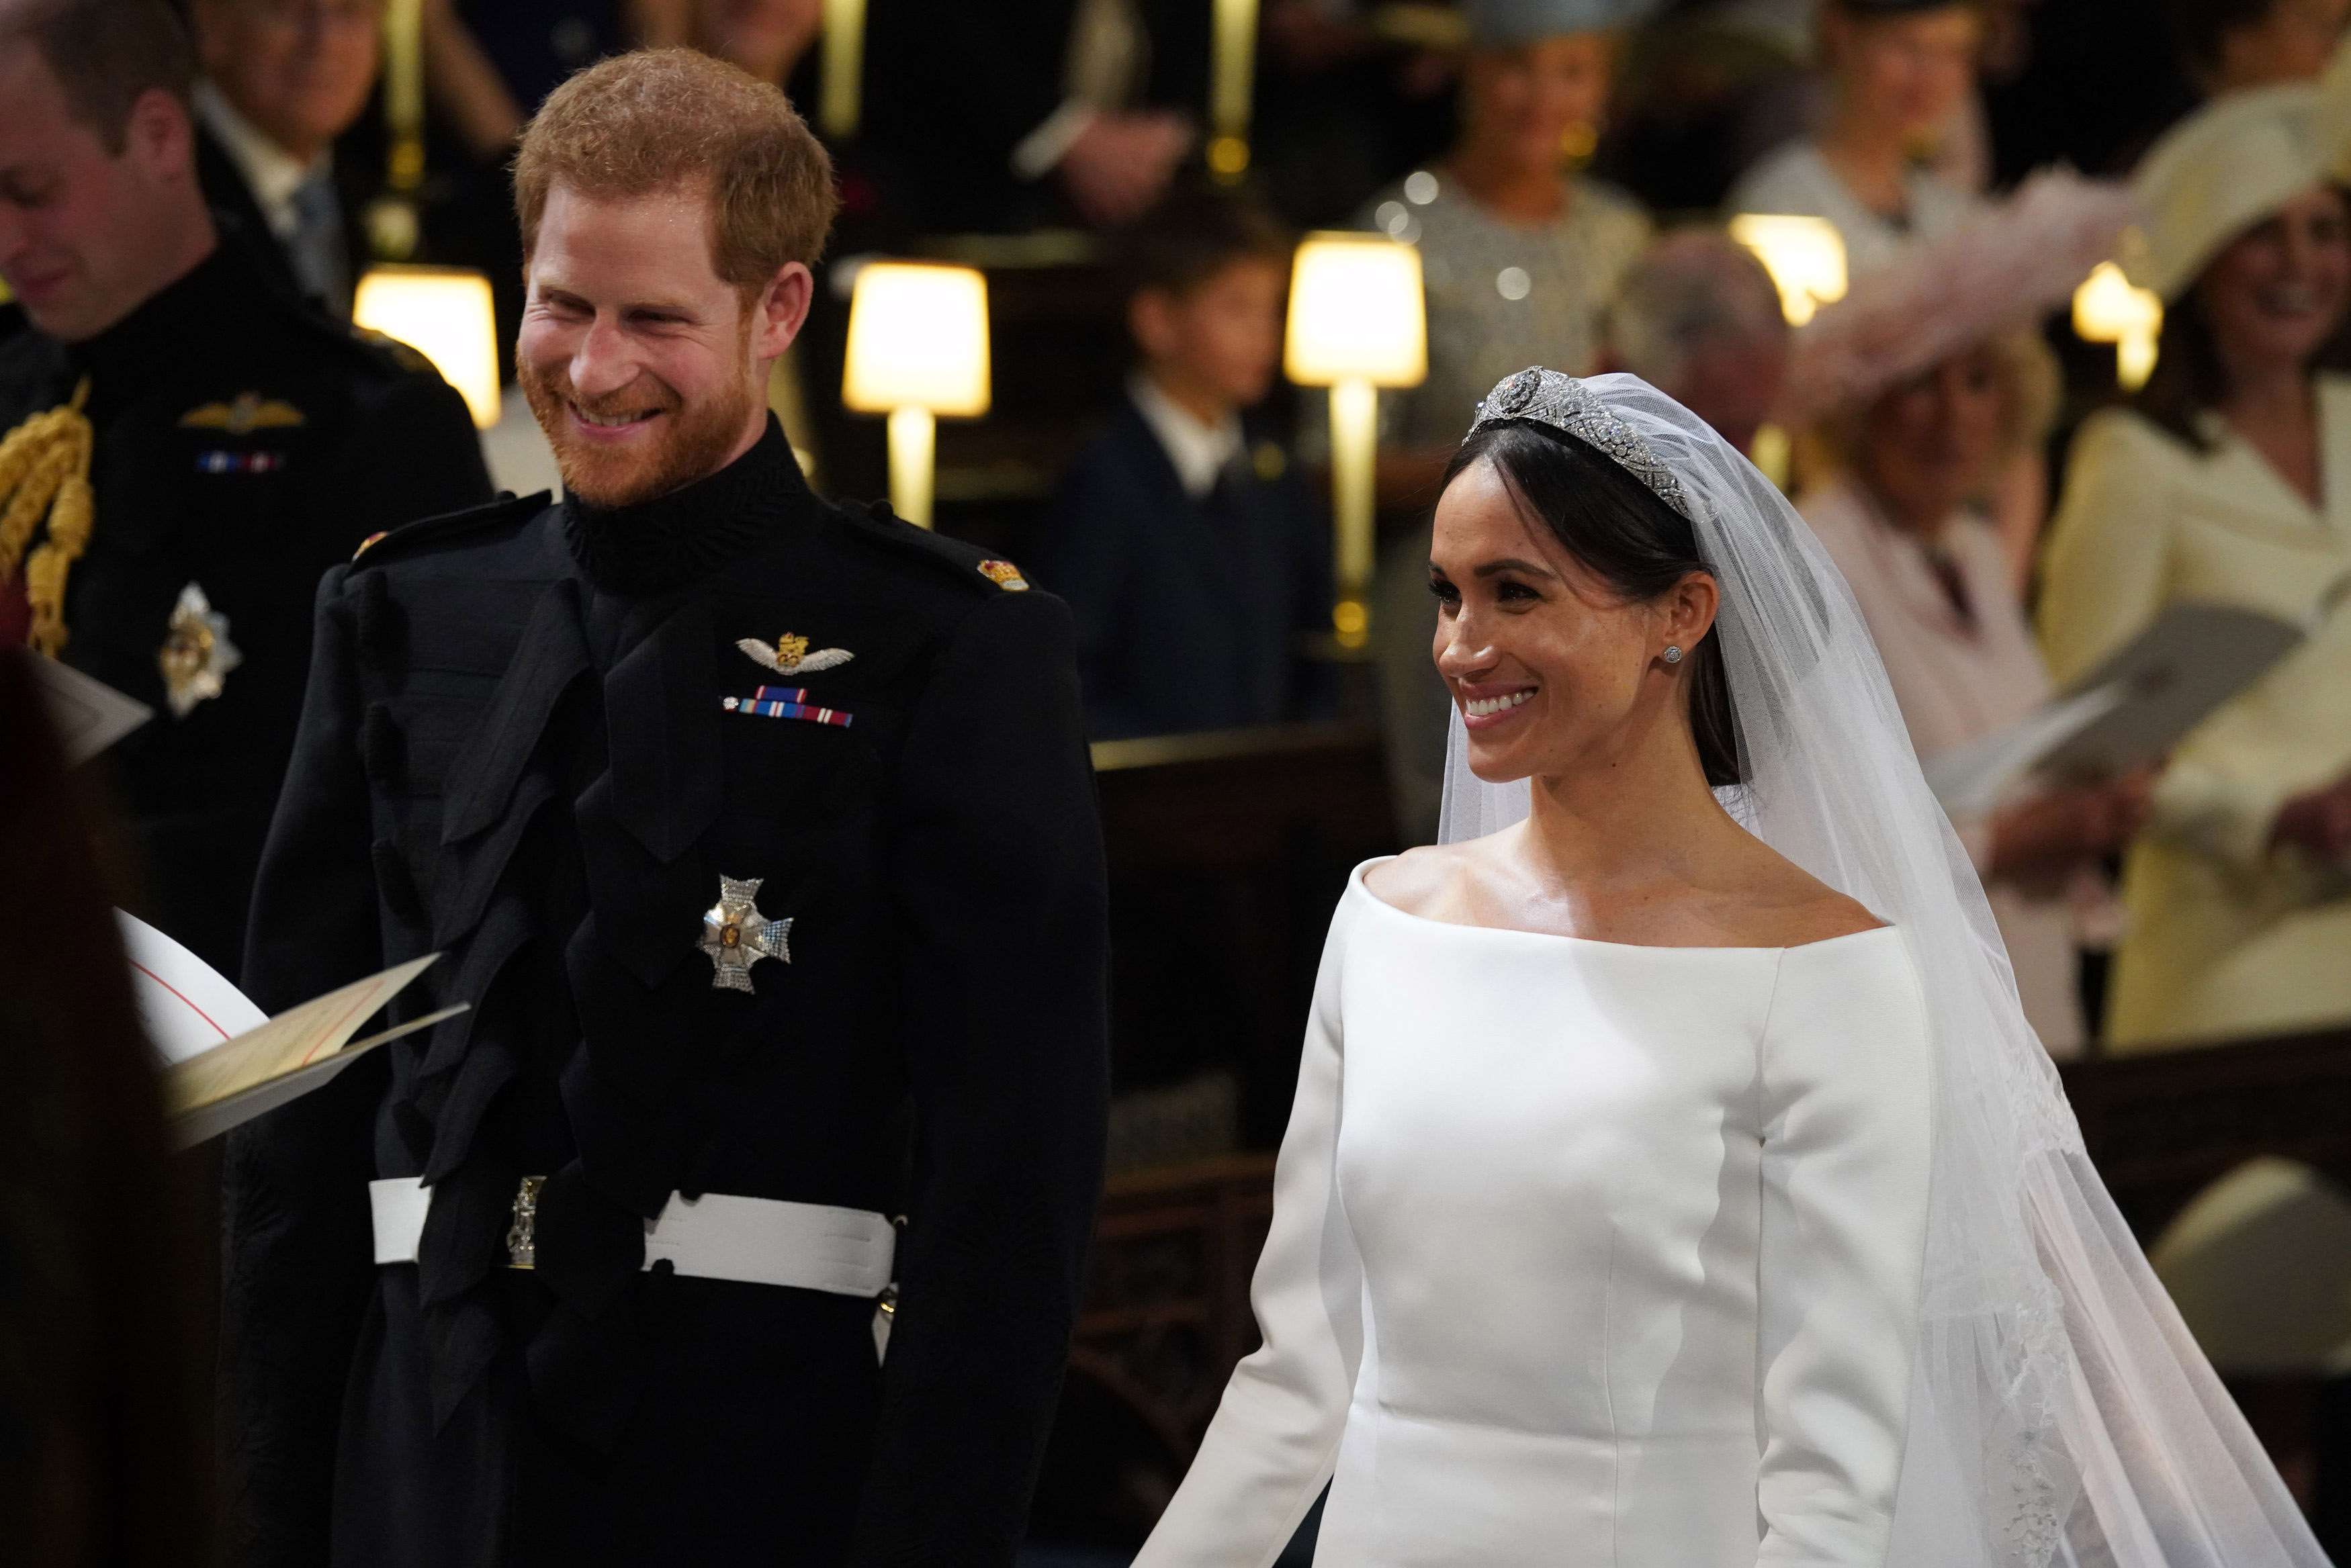 Prince Harry and Meghan Markle wed